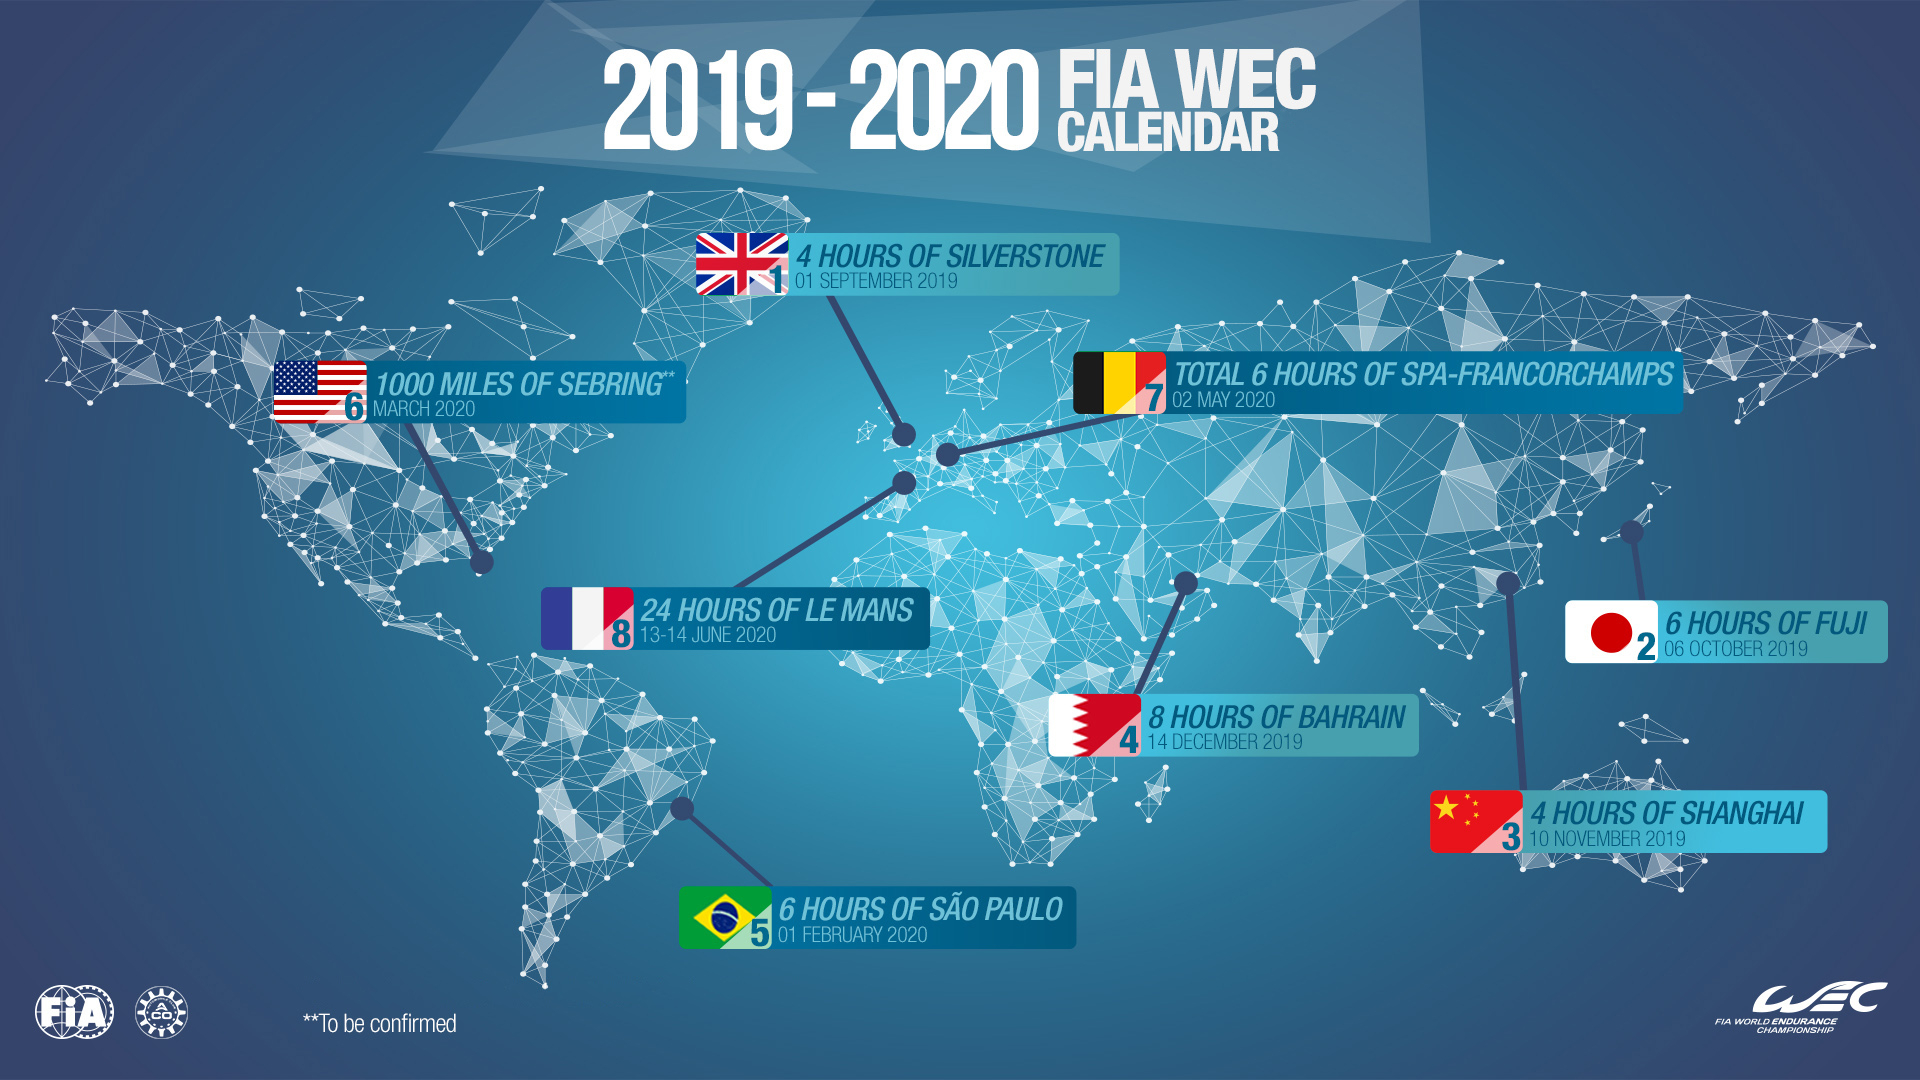 Wec - 2019/2020 Fia Wec Calendar Is Approved | Federation